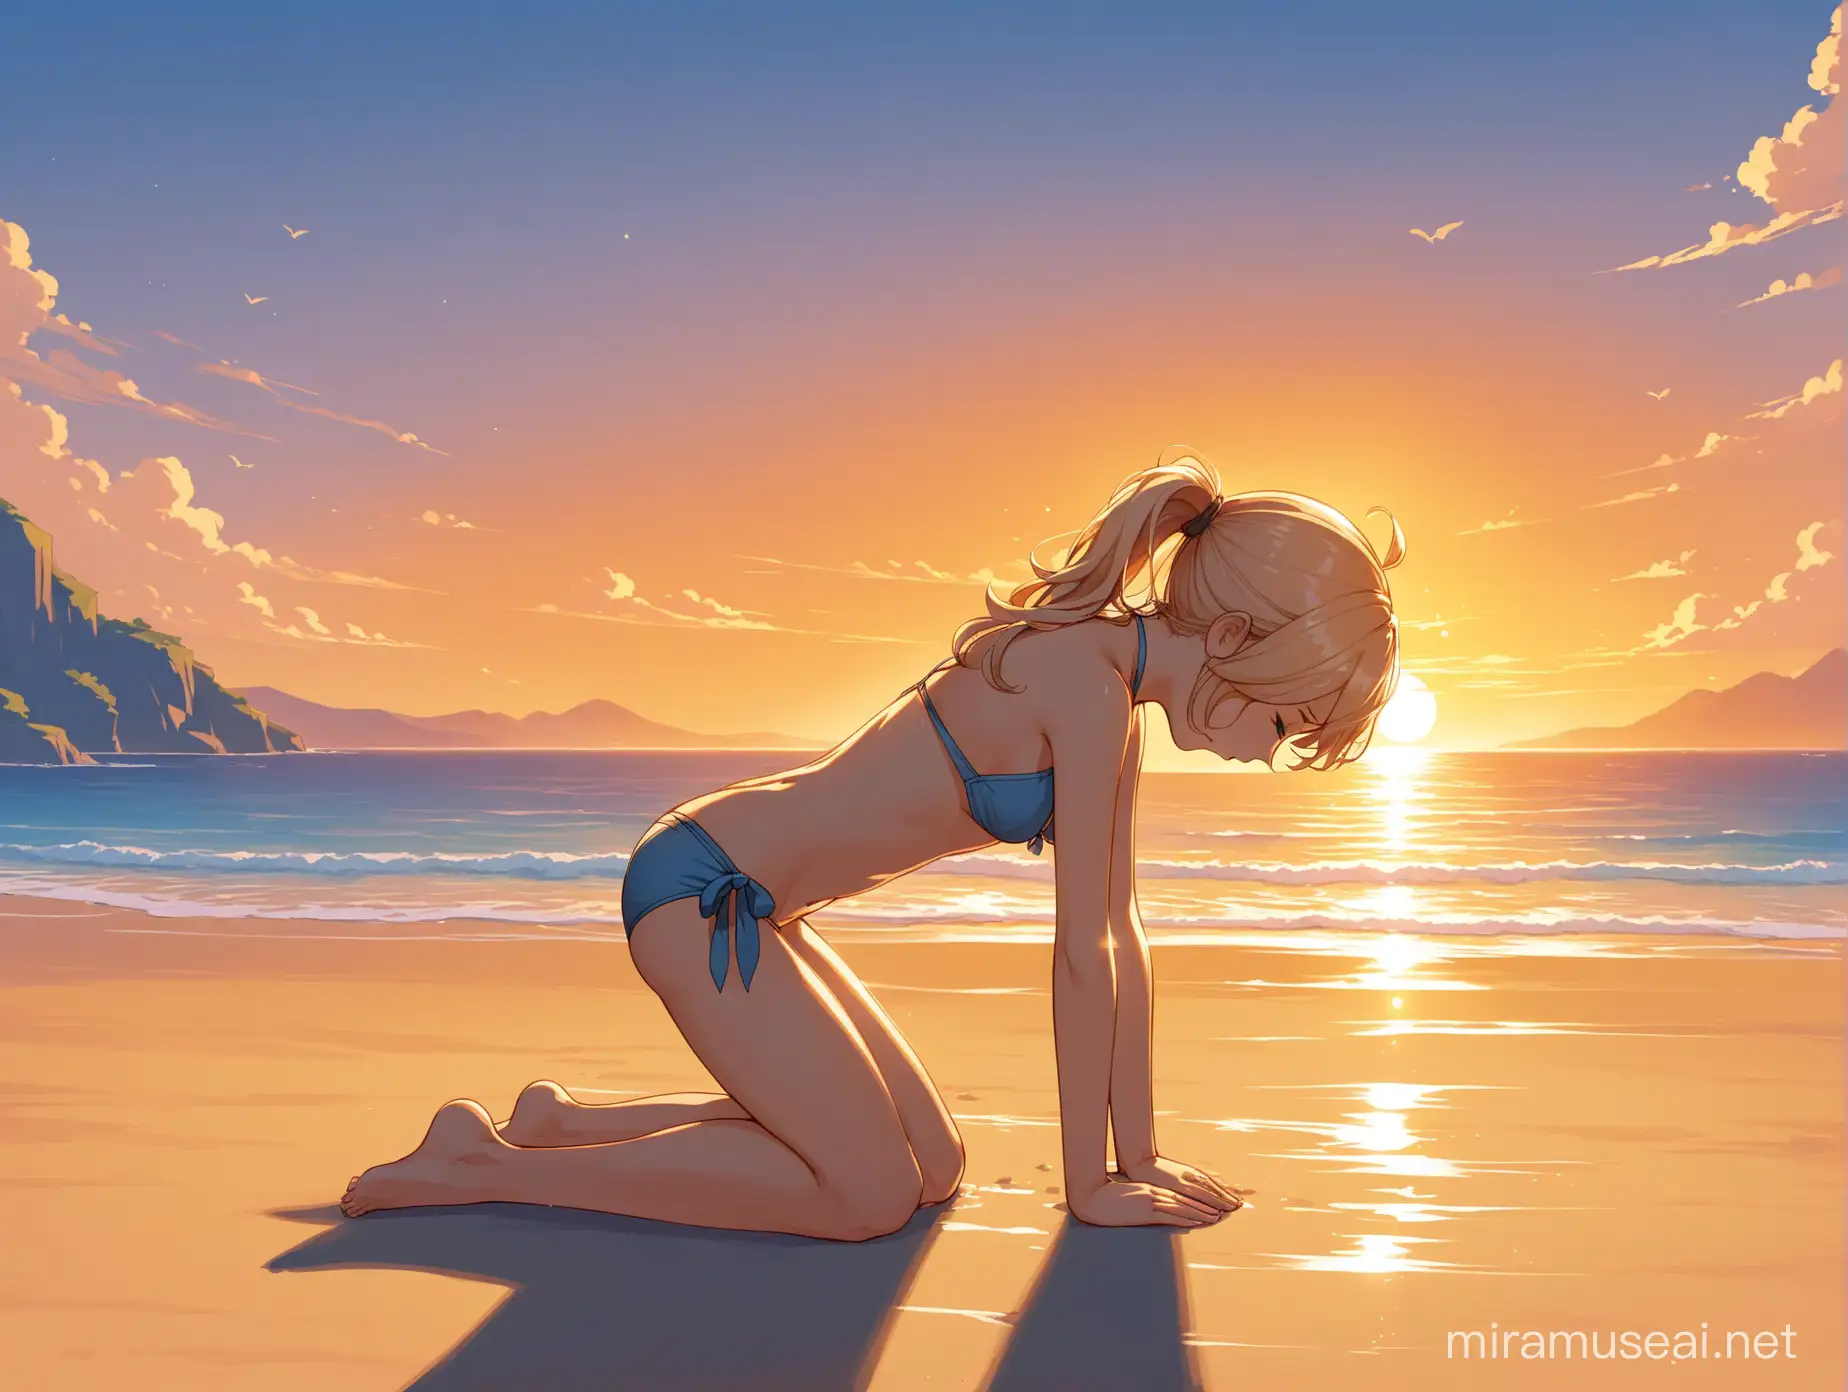 Genshin Impact Jean Character Praying in Sujud at Sunset Beach in Bikini